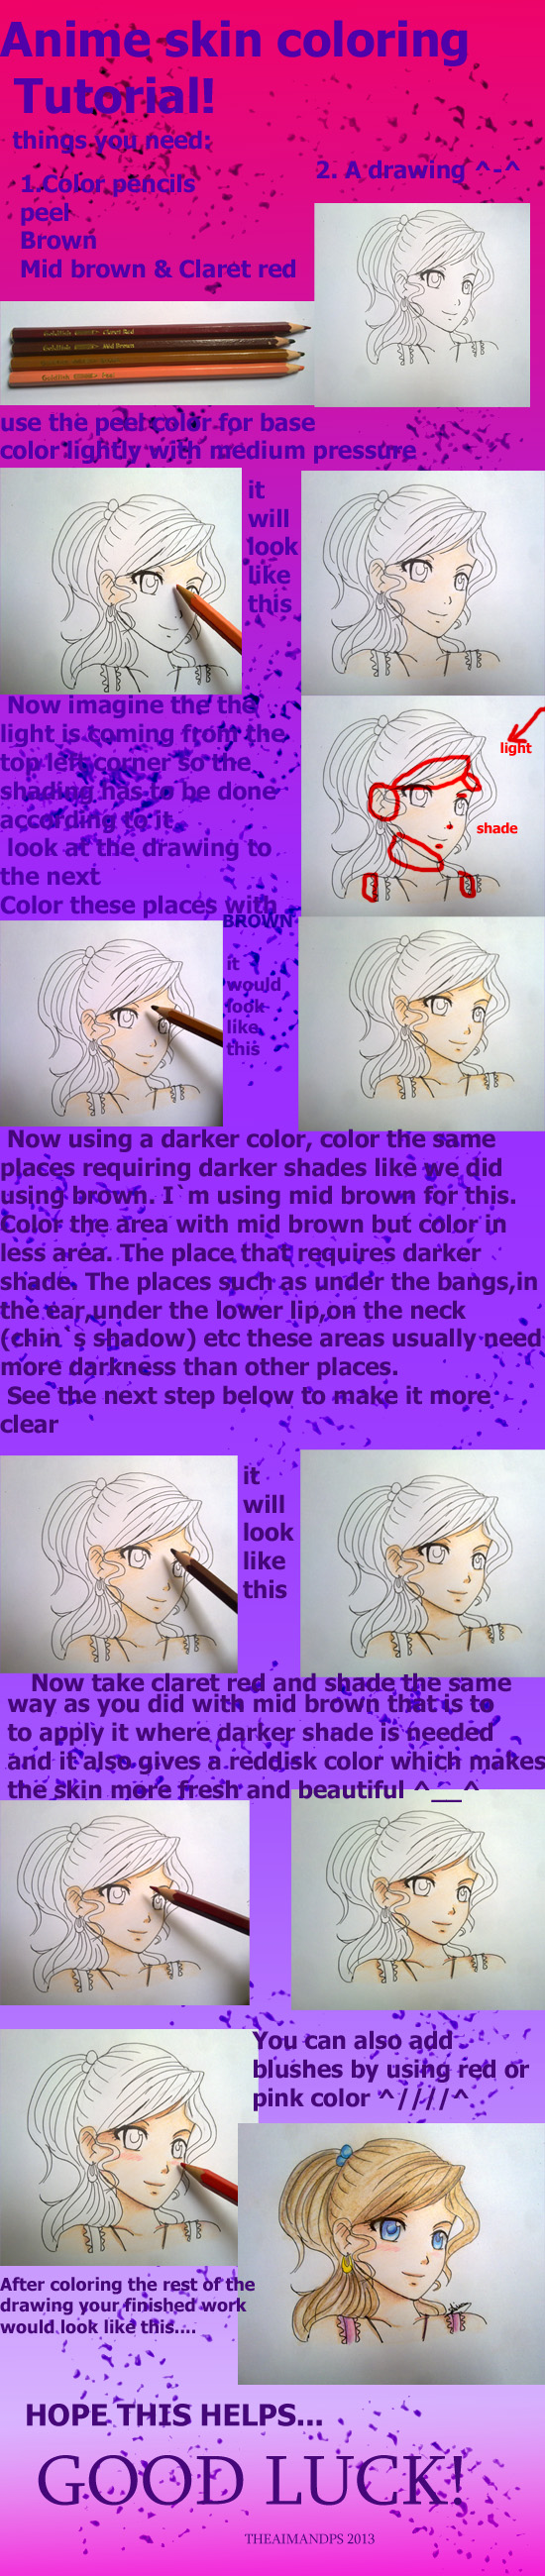 Anime Skin Coloring Tutorial by THEAIMANDPS on DeviantArt